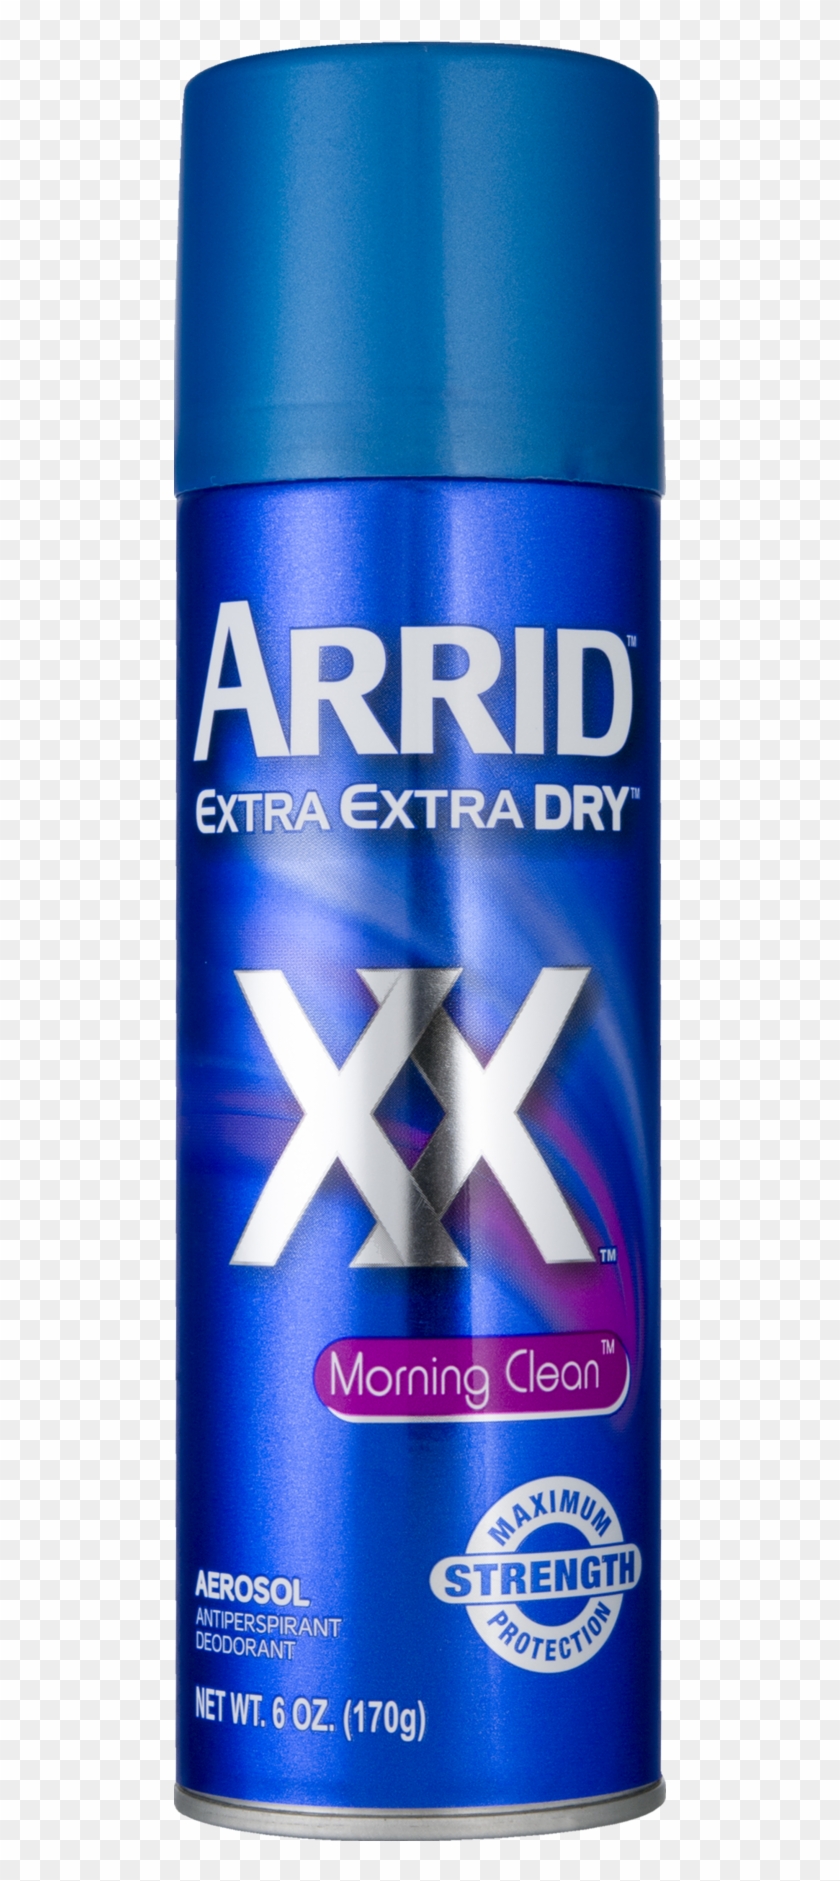 Arrid Xx Extra Extra Dry Morning Clean Aerosol Antiperspirant - Spray Arrid Deodorant Clipart #4386743